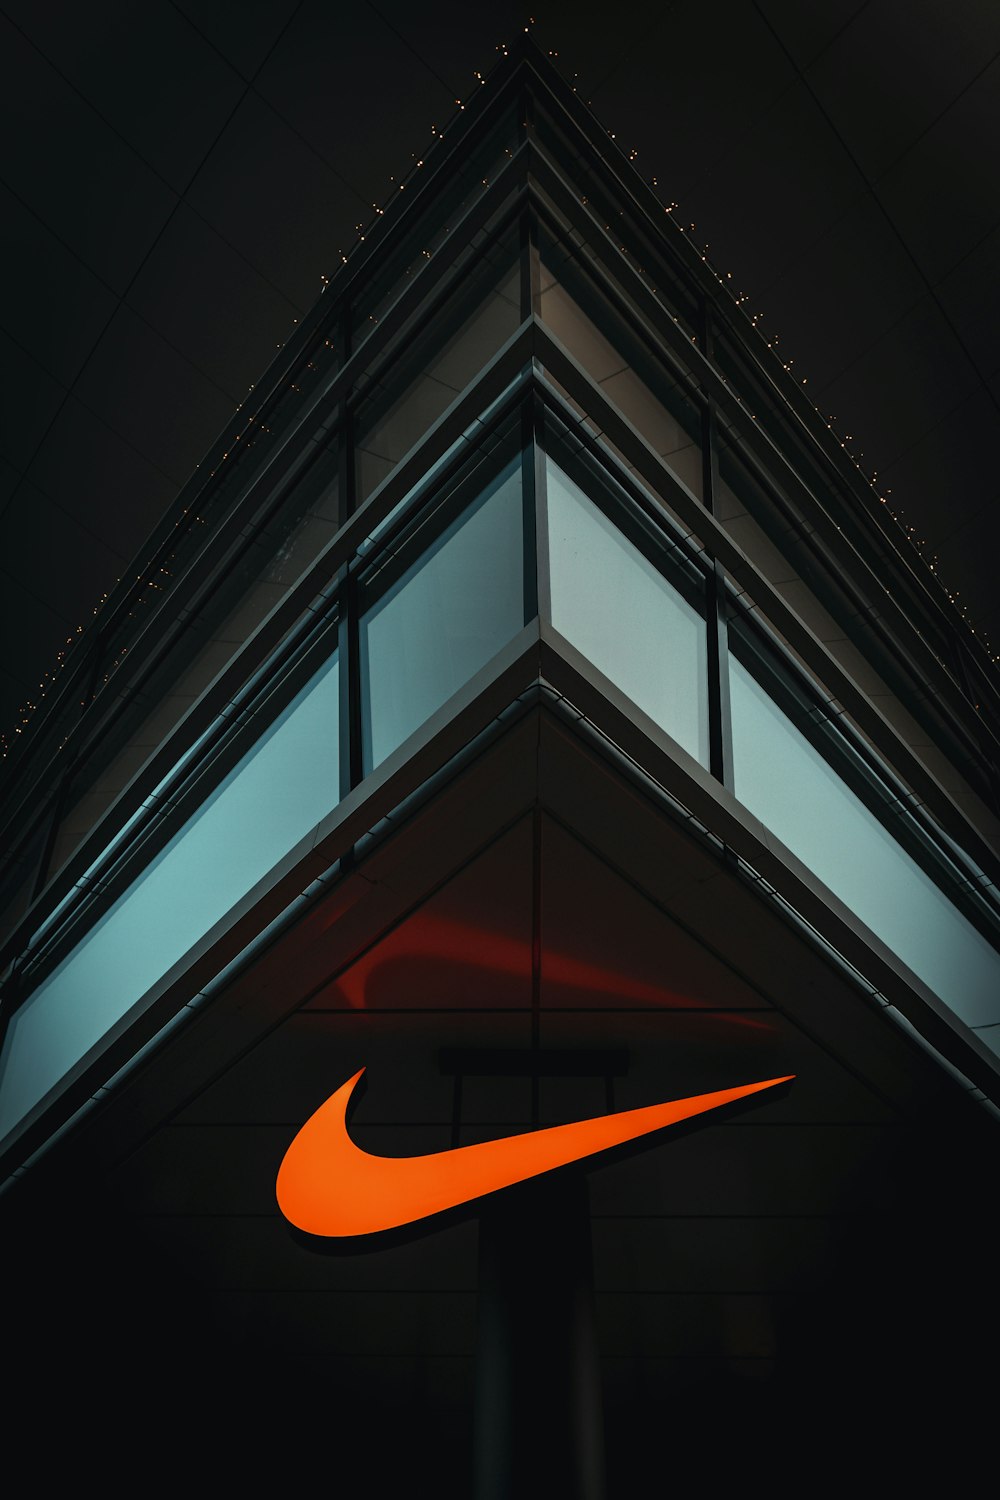 Nike Logo Pictures | Download Free Images on Unsplash